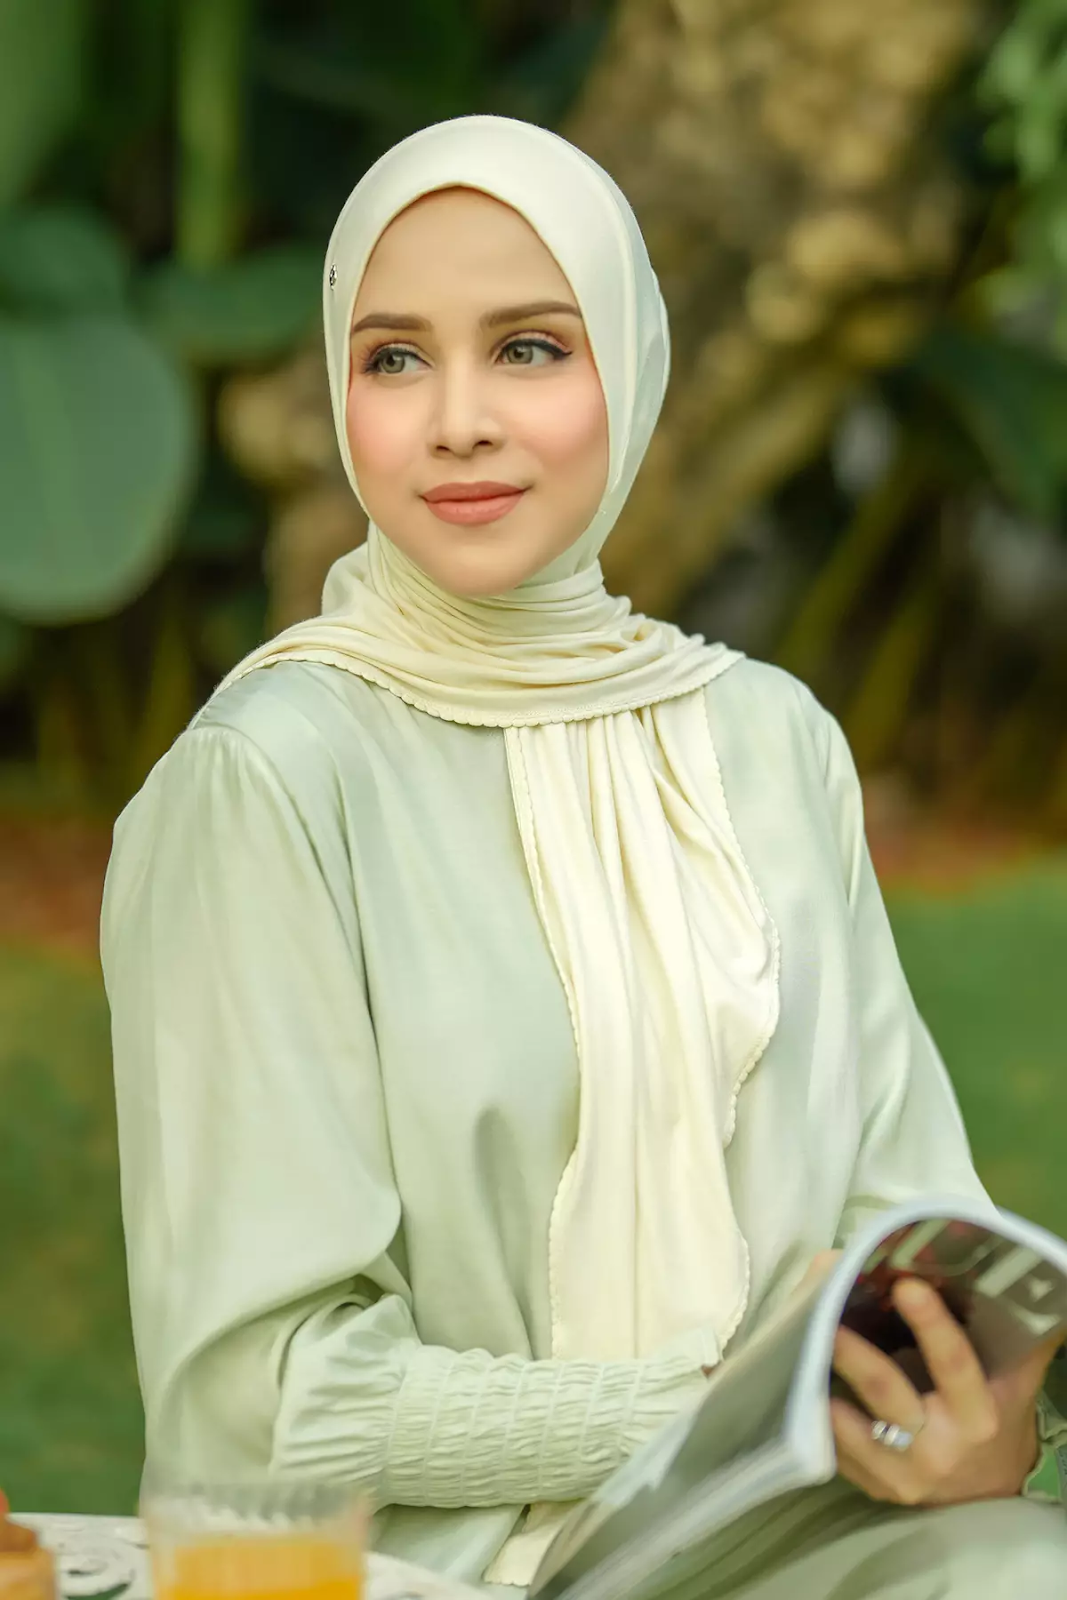 Rekomendasi Hijab Sport Super Nyaman untuk Kamu yang Aktif - ZALORA Thread